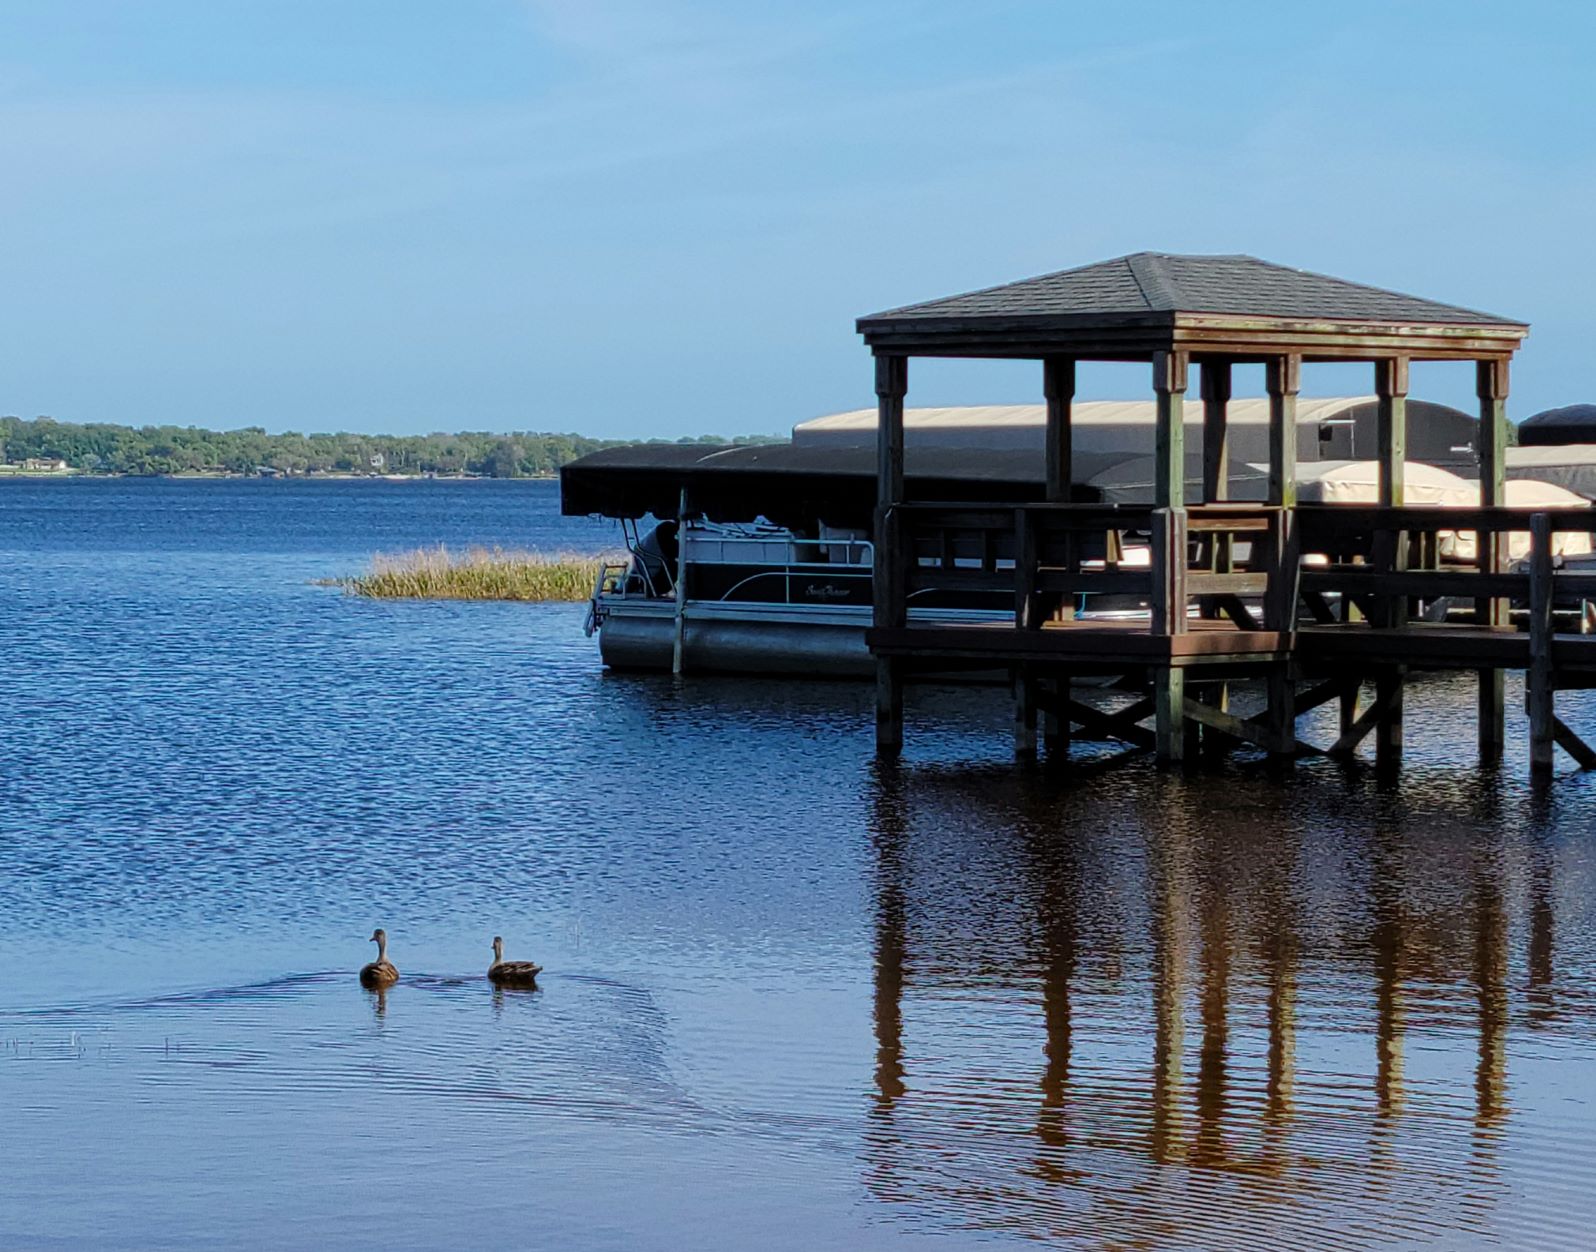 Wood ducks paddle with contentment around Lake Minneola, Florida